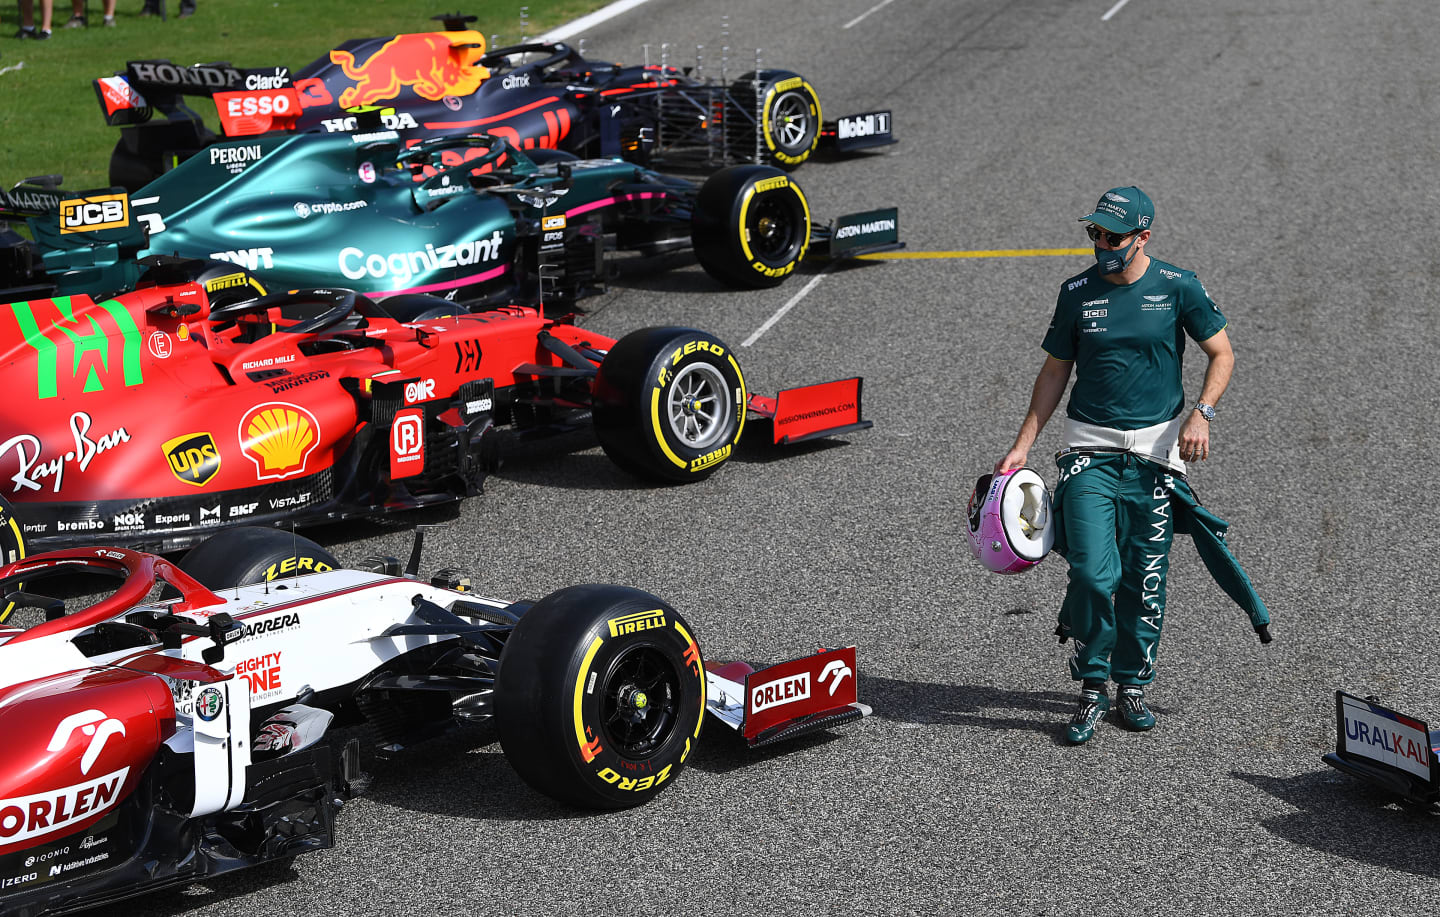 BAHRAIN, BAHRAIN - MARCH 12: Sebastian Vettel of Germany and Aston Martin walks amongst the cars on